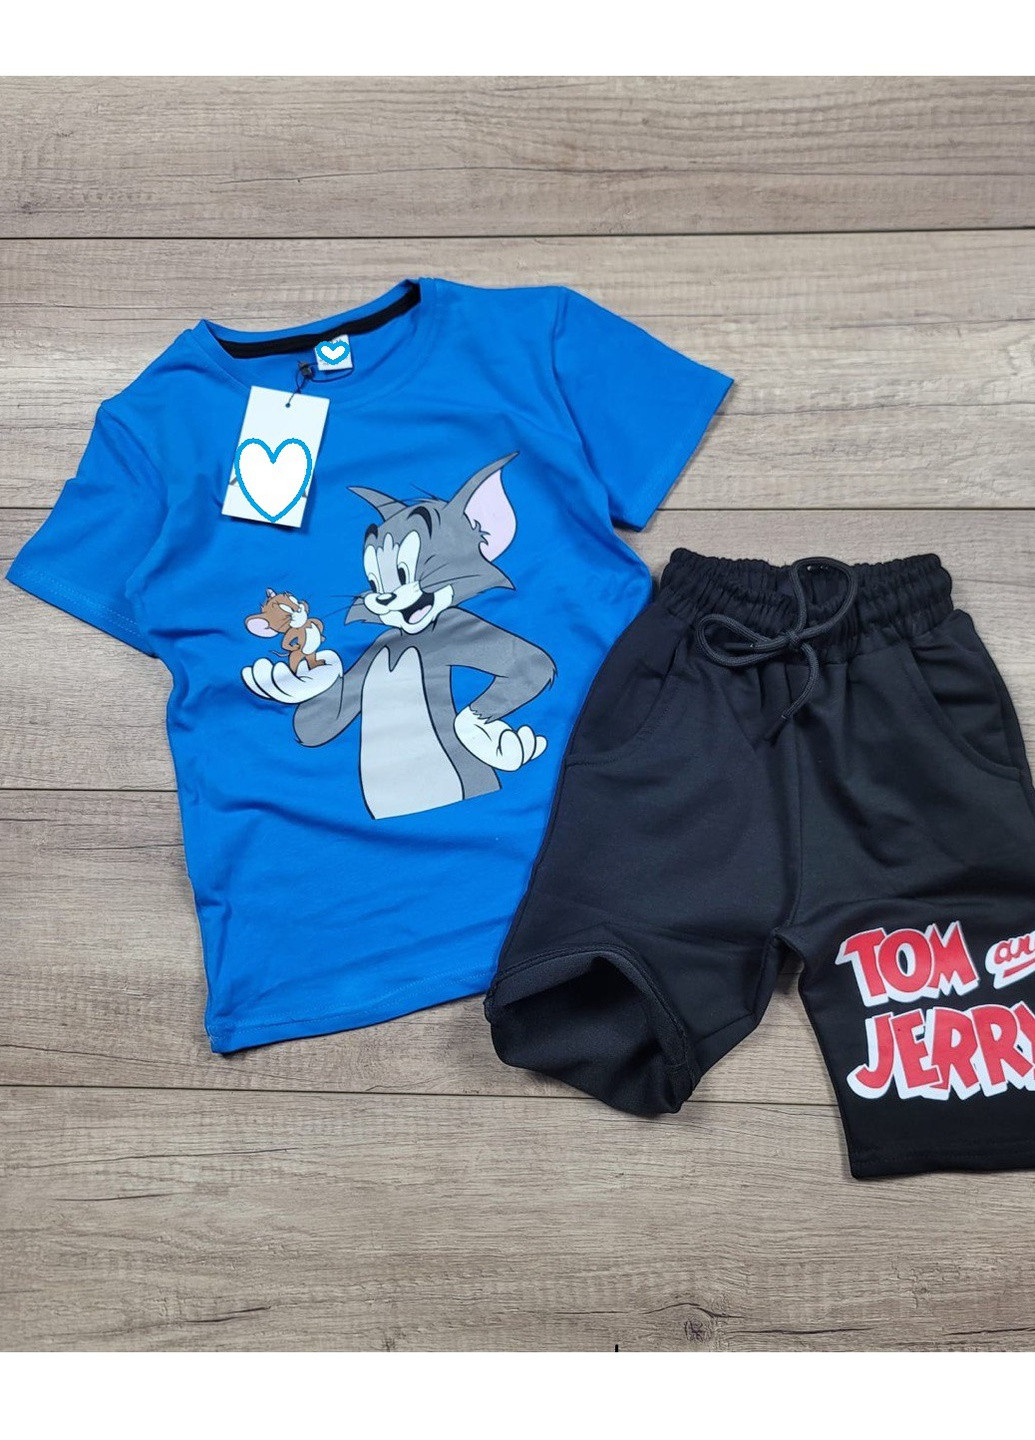 Синий летний костюм легкий (футболка, шорты) том и джерри (tom and jerry) Disney